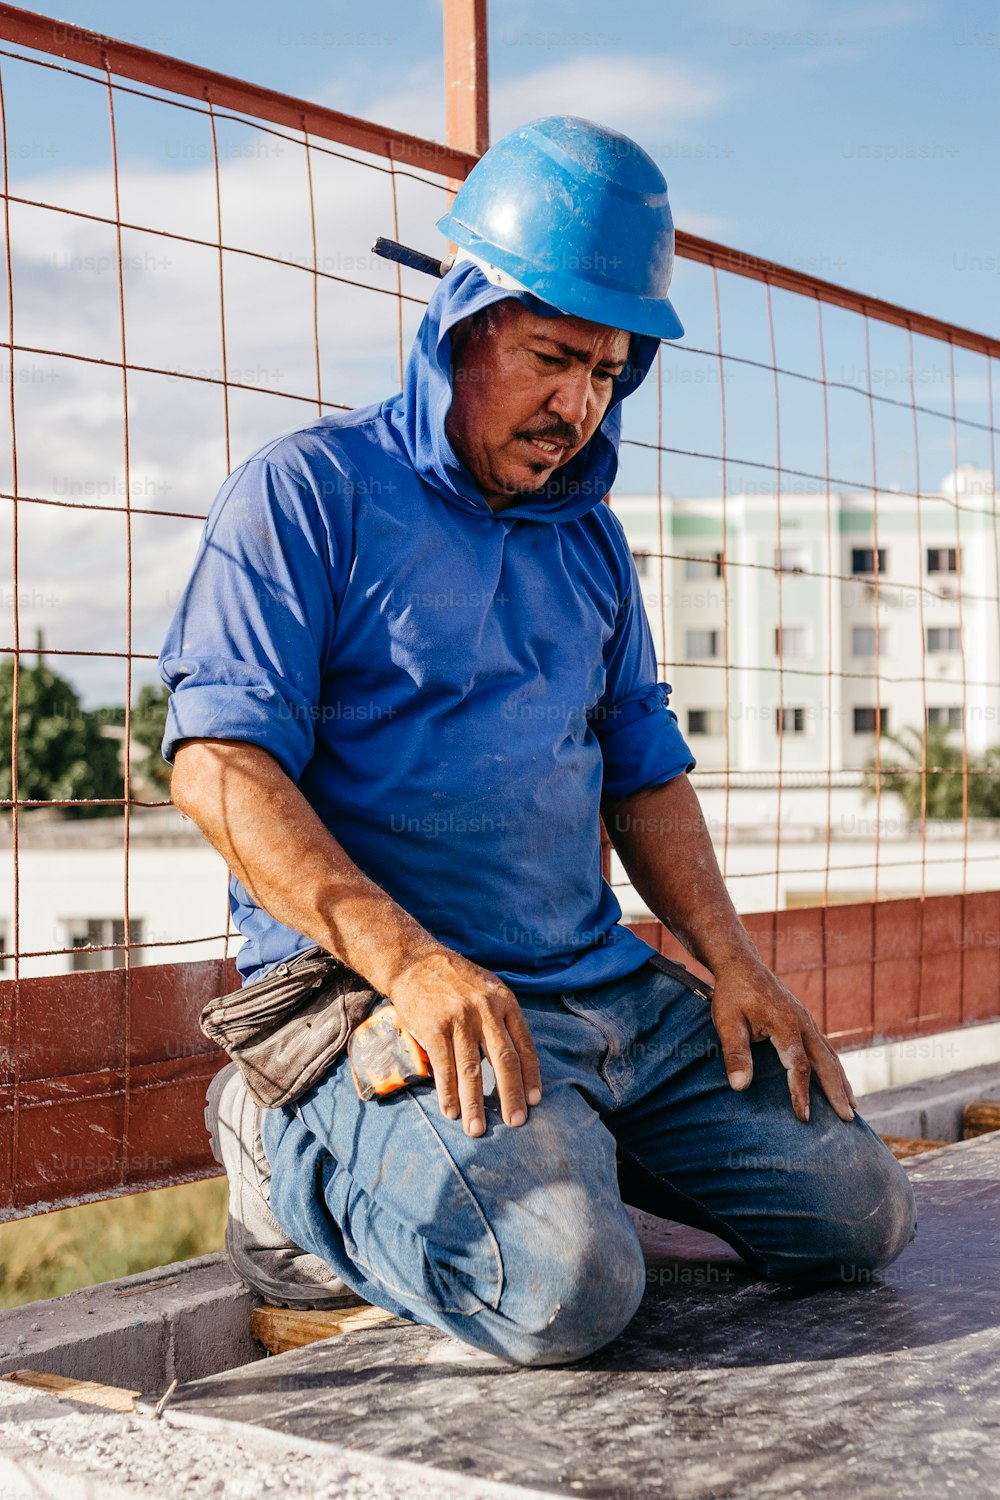 a man in a blue shirt and a blue helmet